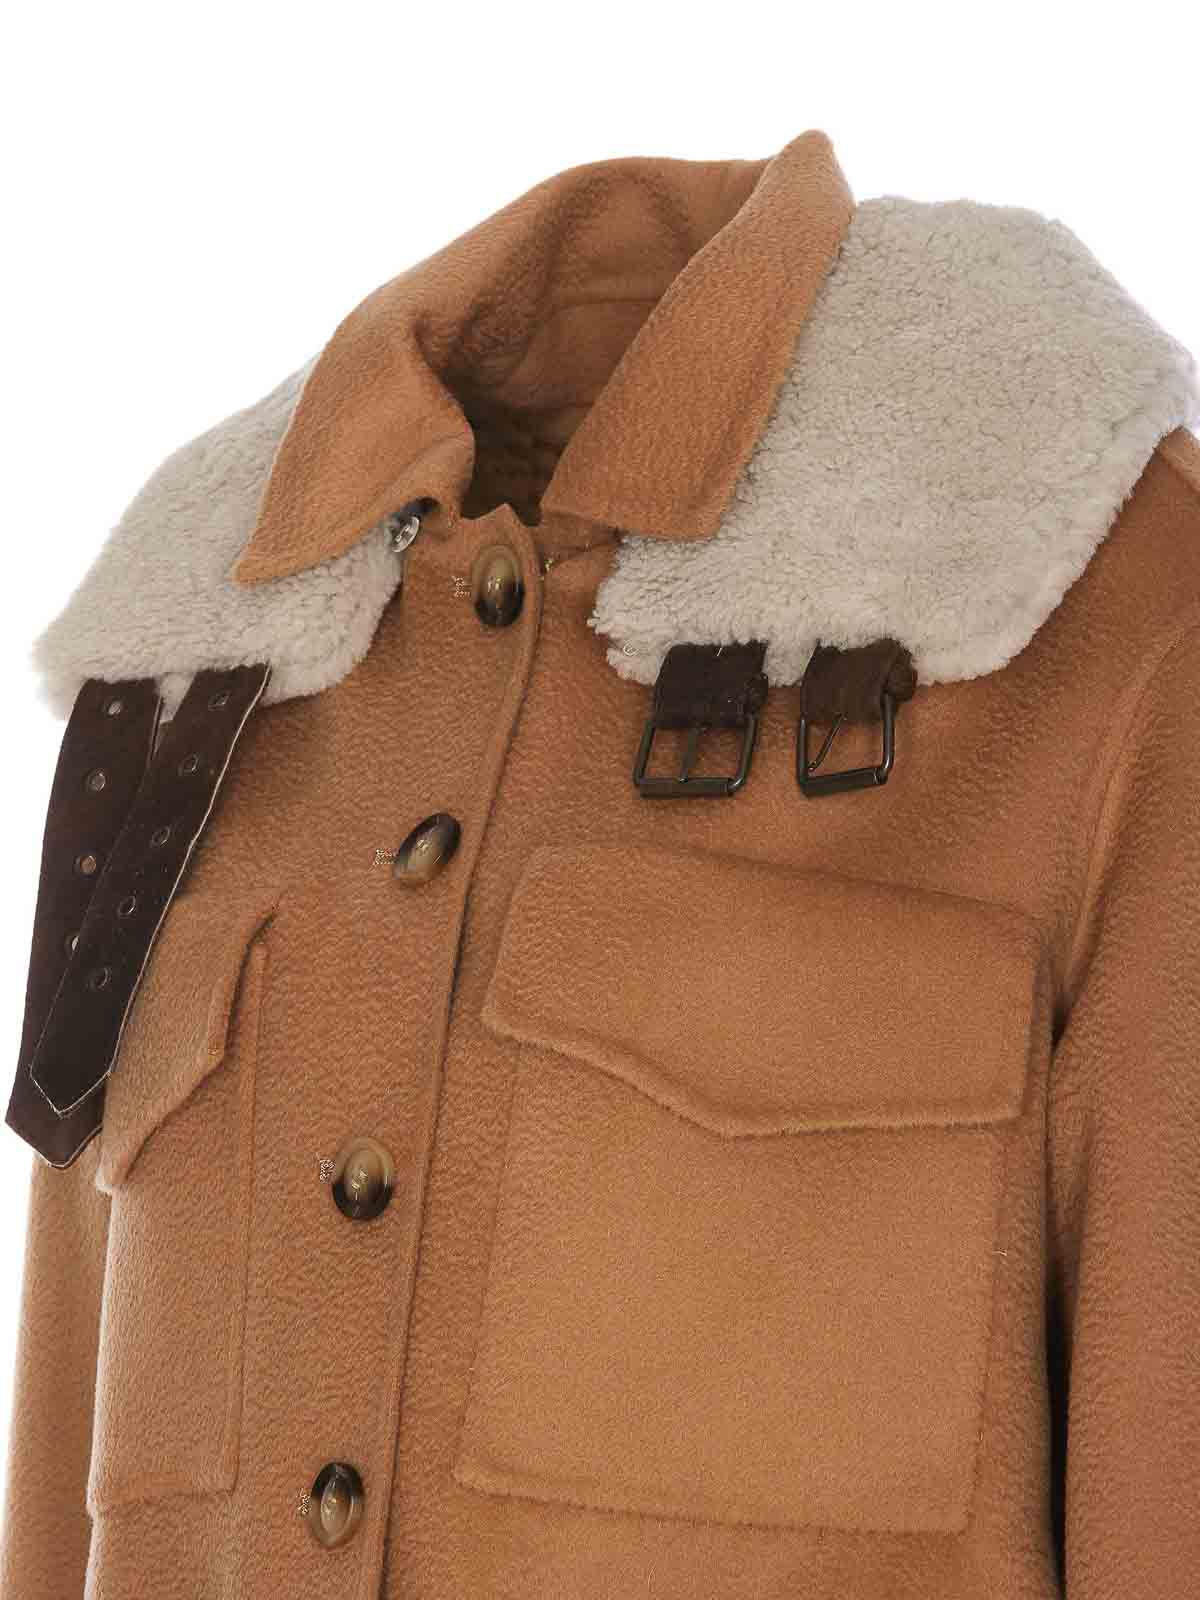 Casual jackets Ava Adore - Overshirt jacket - 25AACAMMELLO